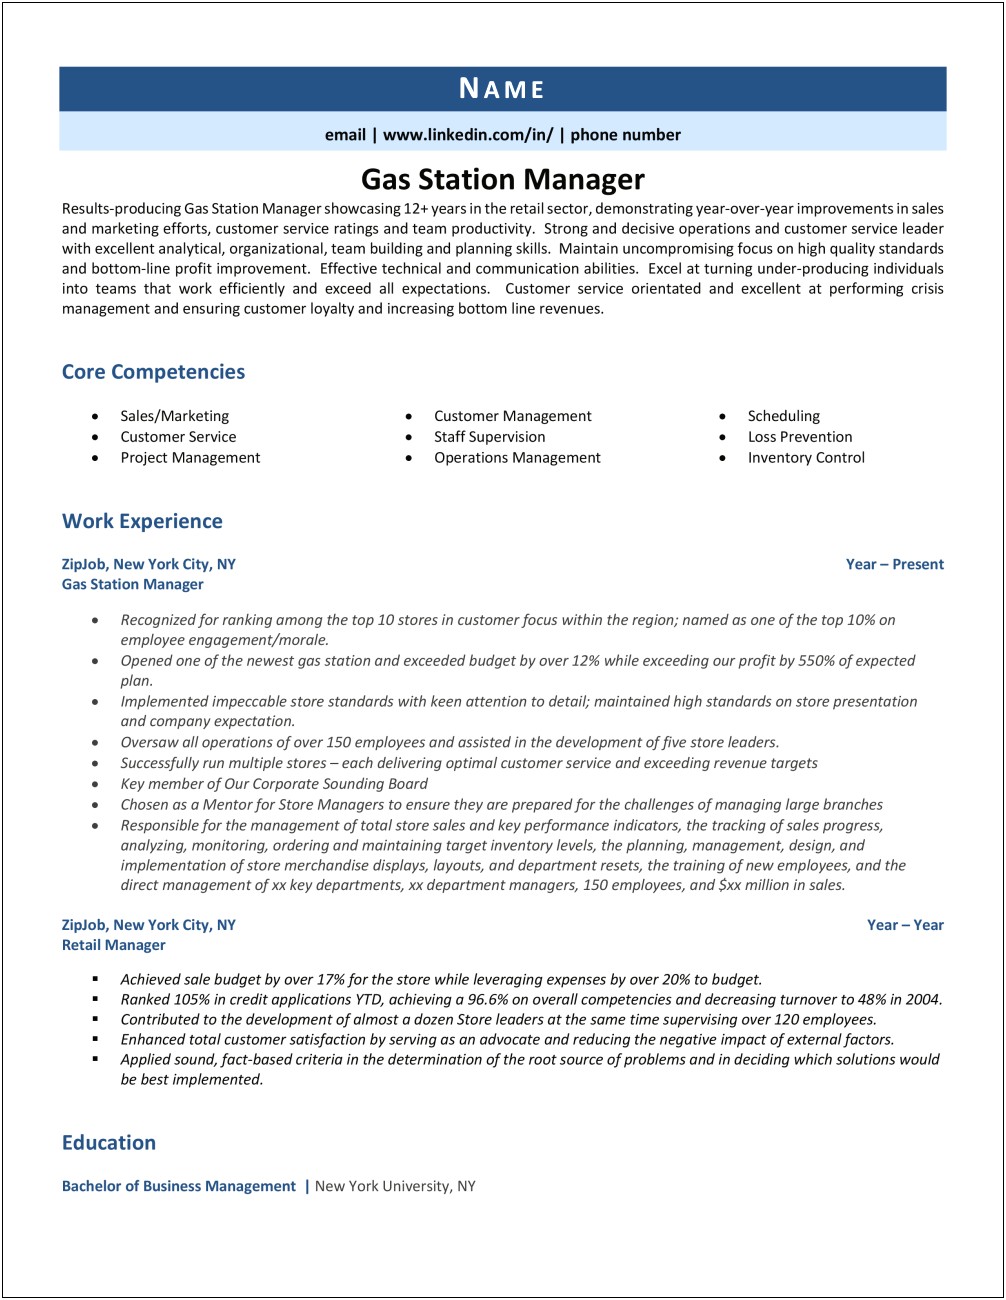 Gas Station Job Experience Resume